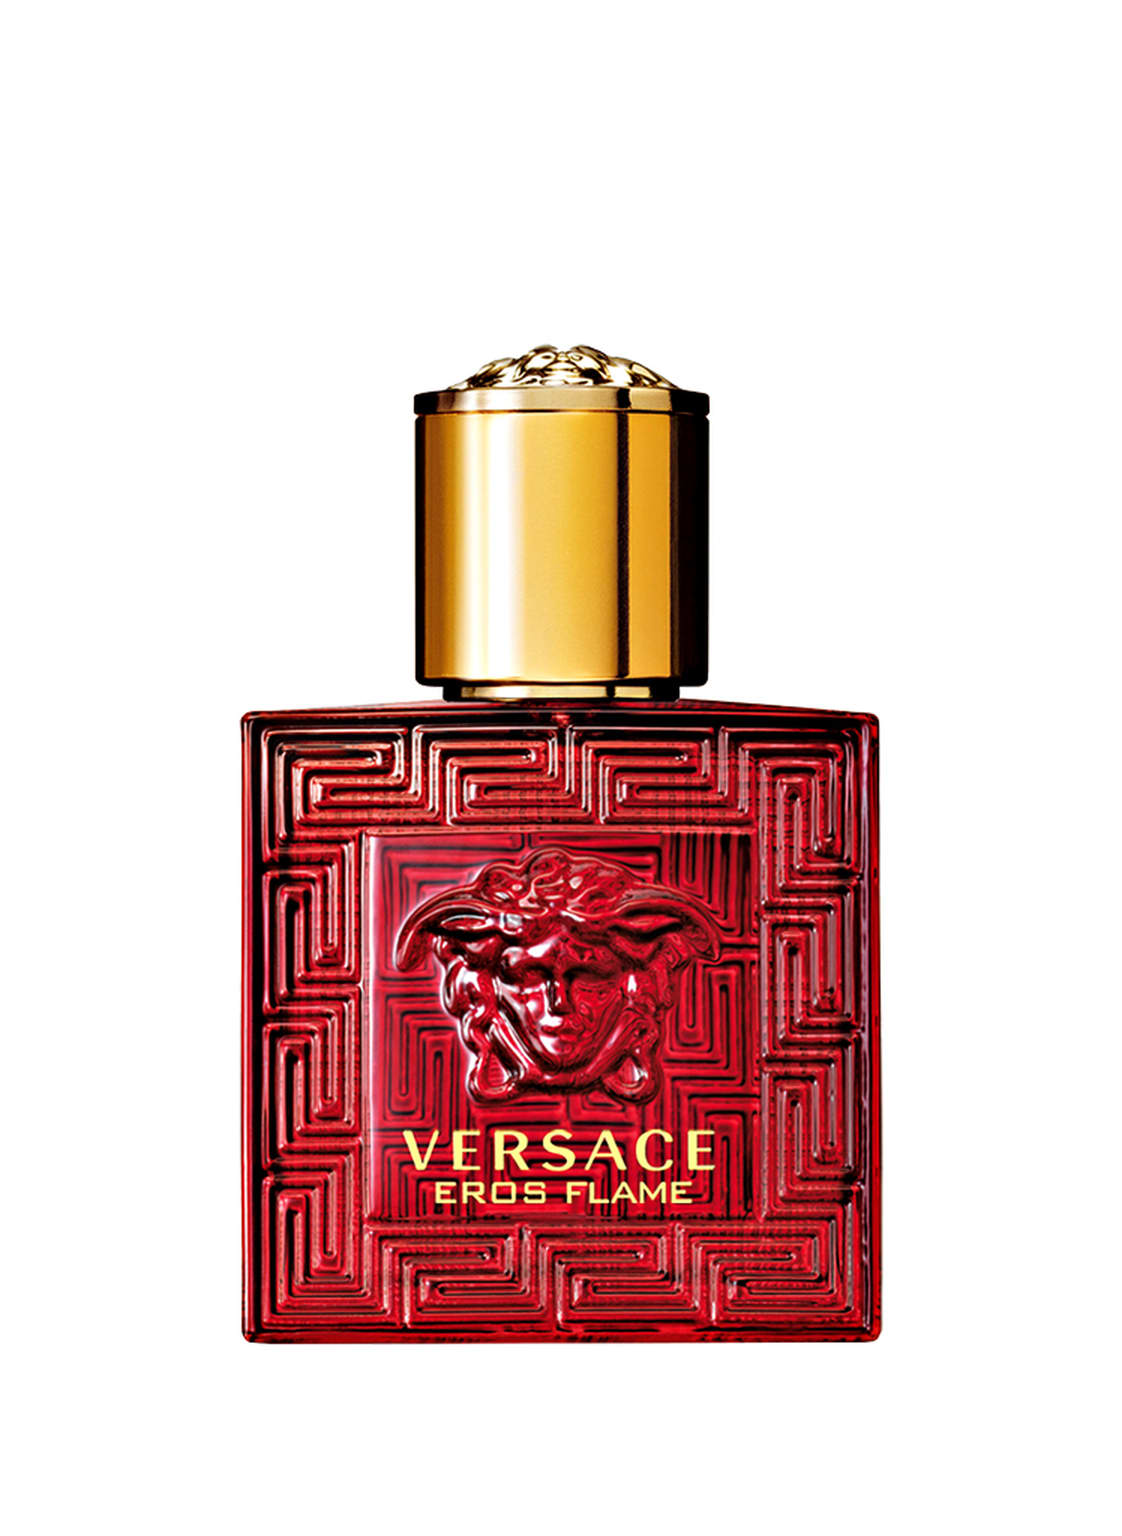 Versace Eros Flame Eau de Parfum 30 ml von Versace